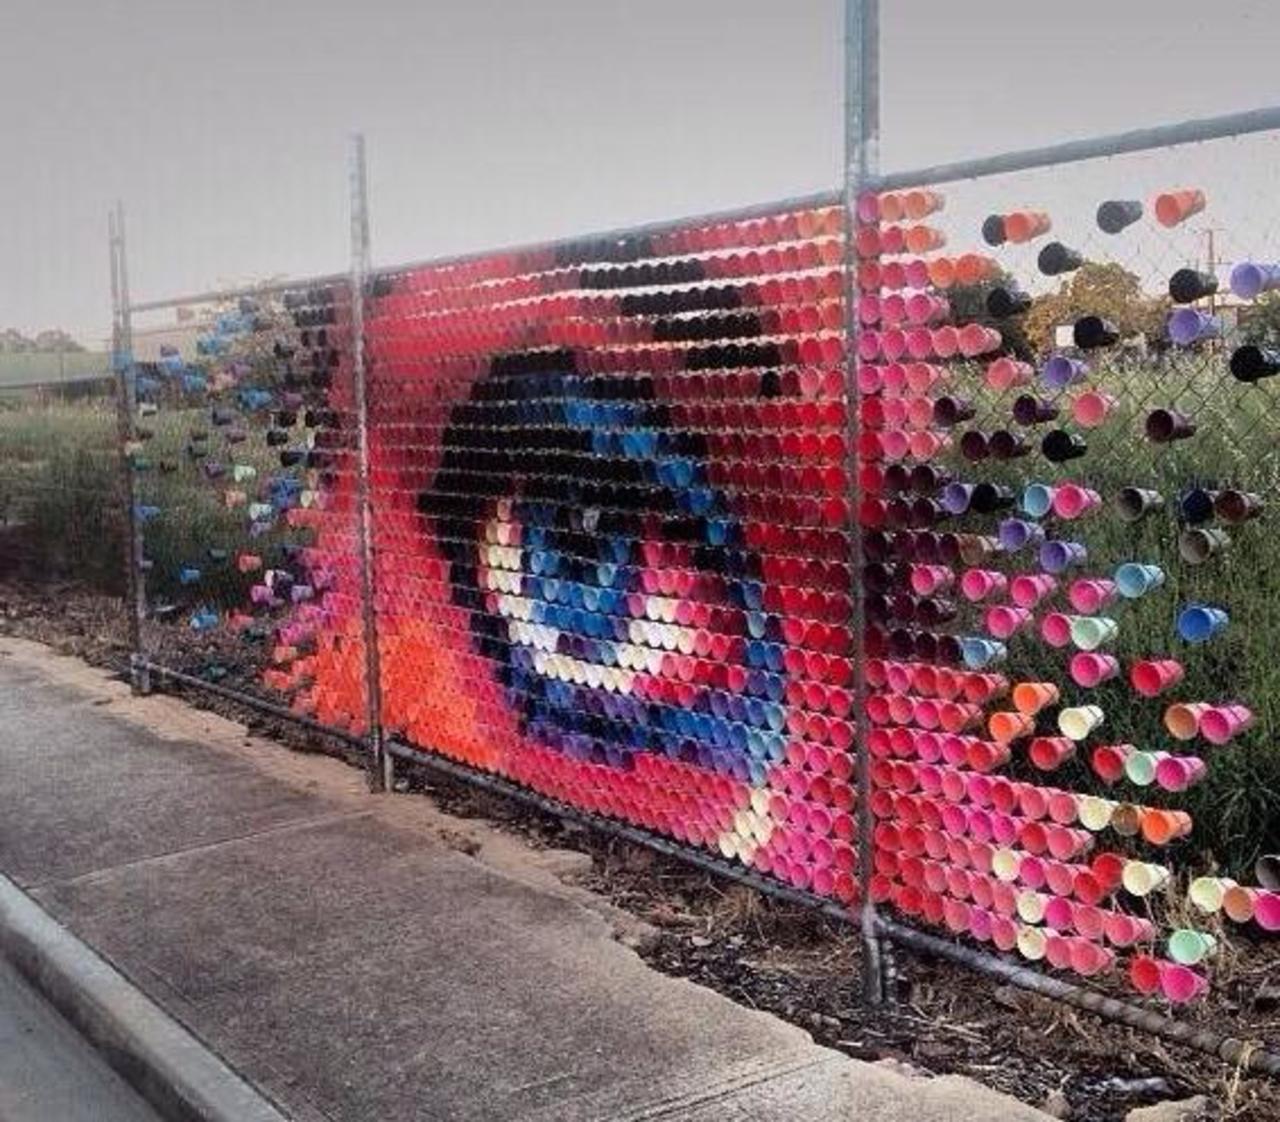 Unique Street Art piece by duo Hyde & Seek brought in an unlikely way #art #graffiti #streetart http://t.co/hTGNz6Muxa RT @GoogleStreetArt